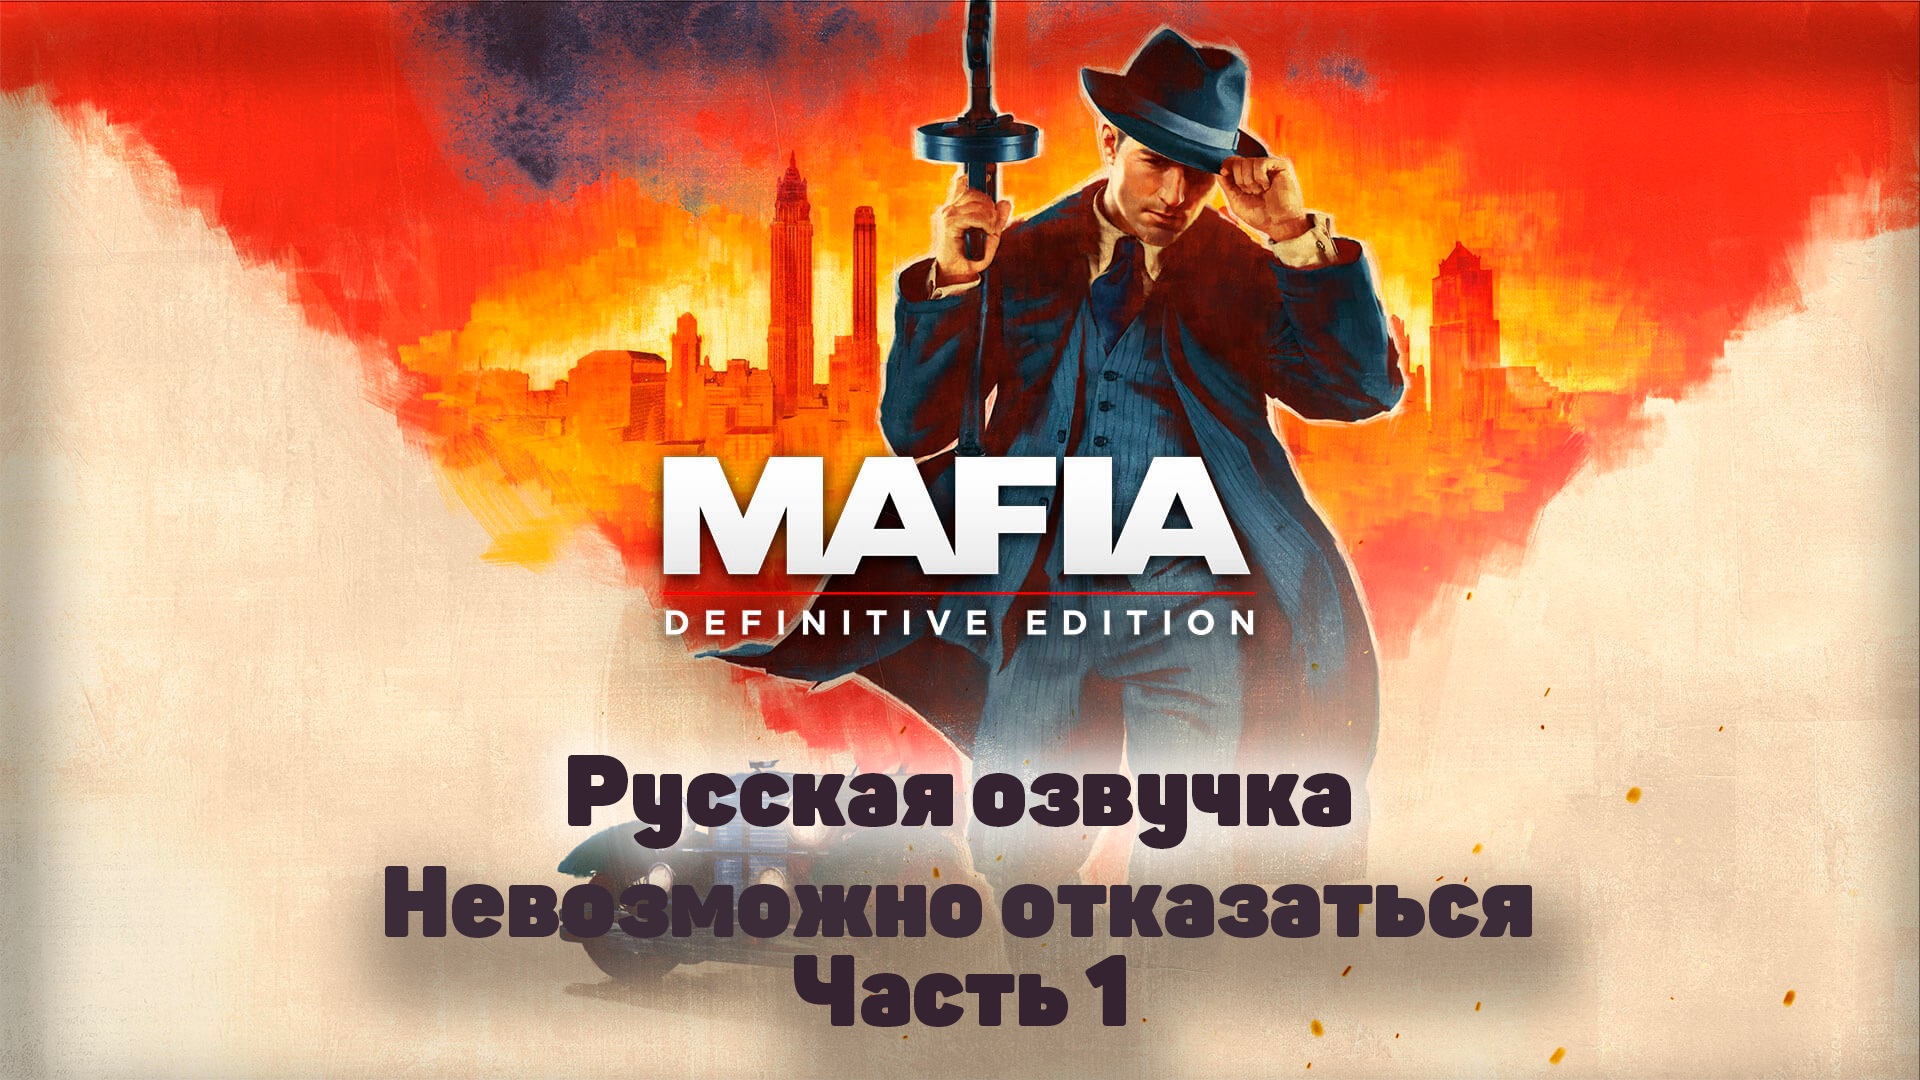 Mafia: Definitive Edition  Часть 1 Невозможно отказаться